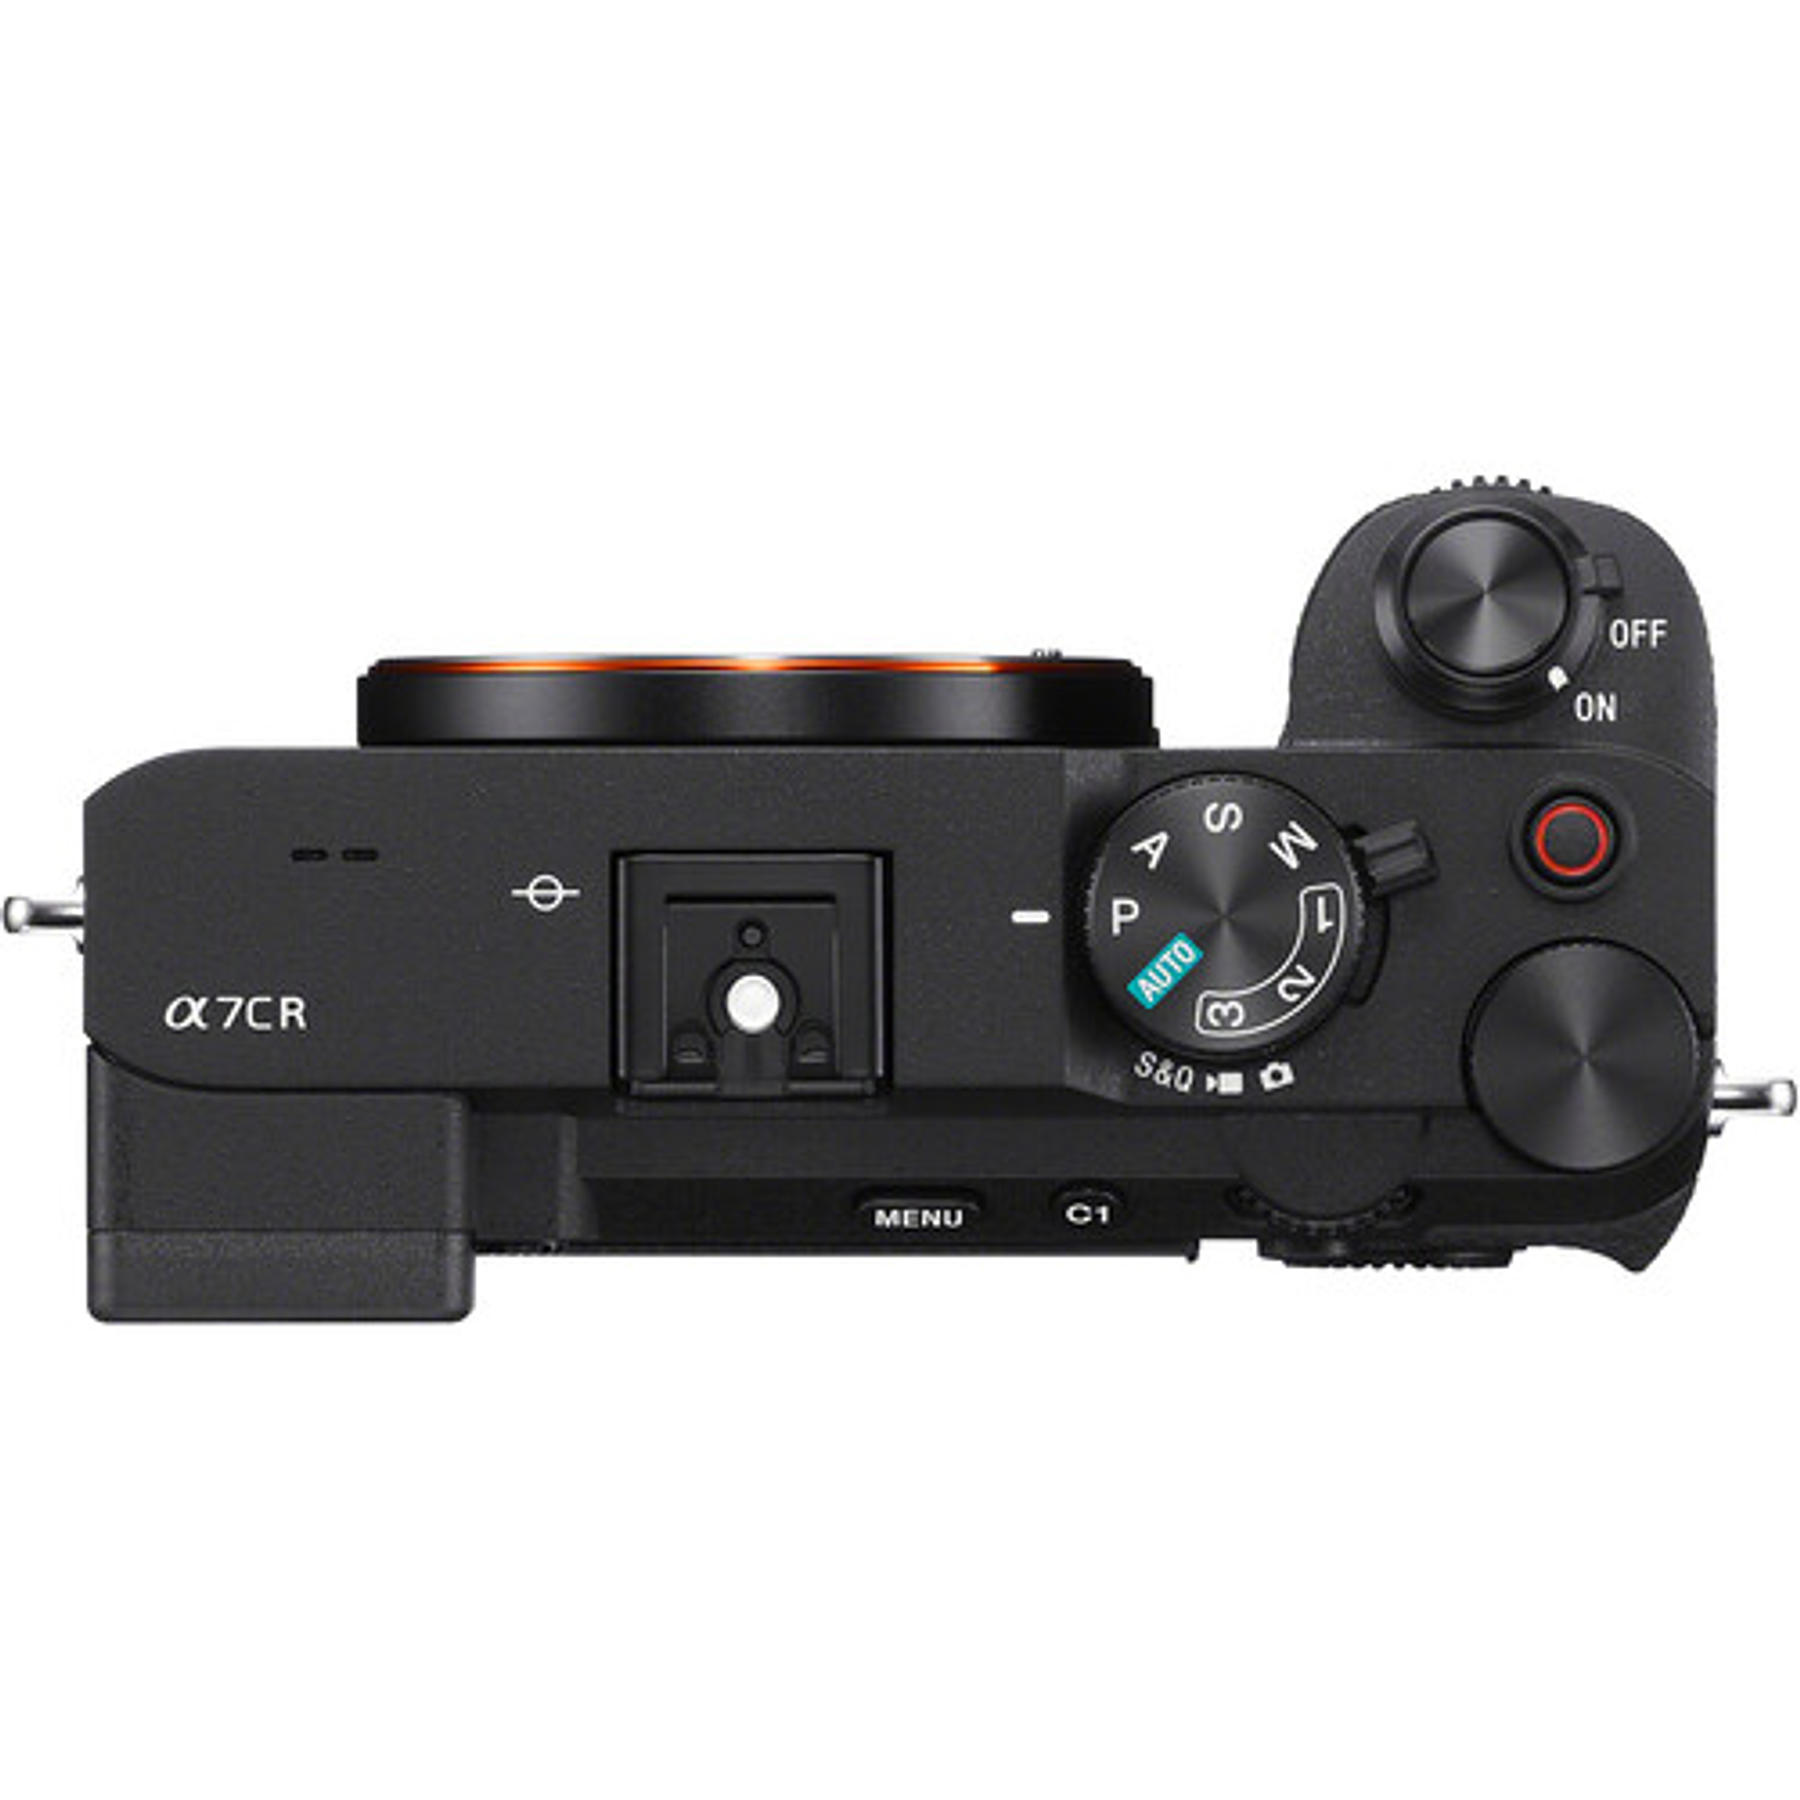 Sony a7CR Mirrorless Camera Body